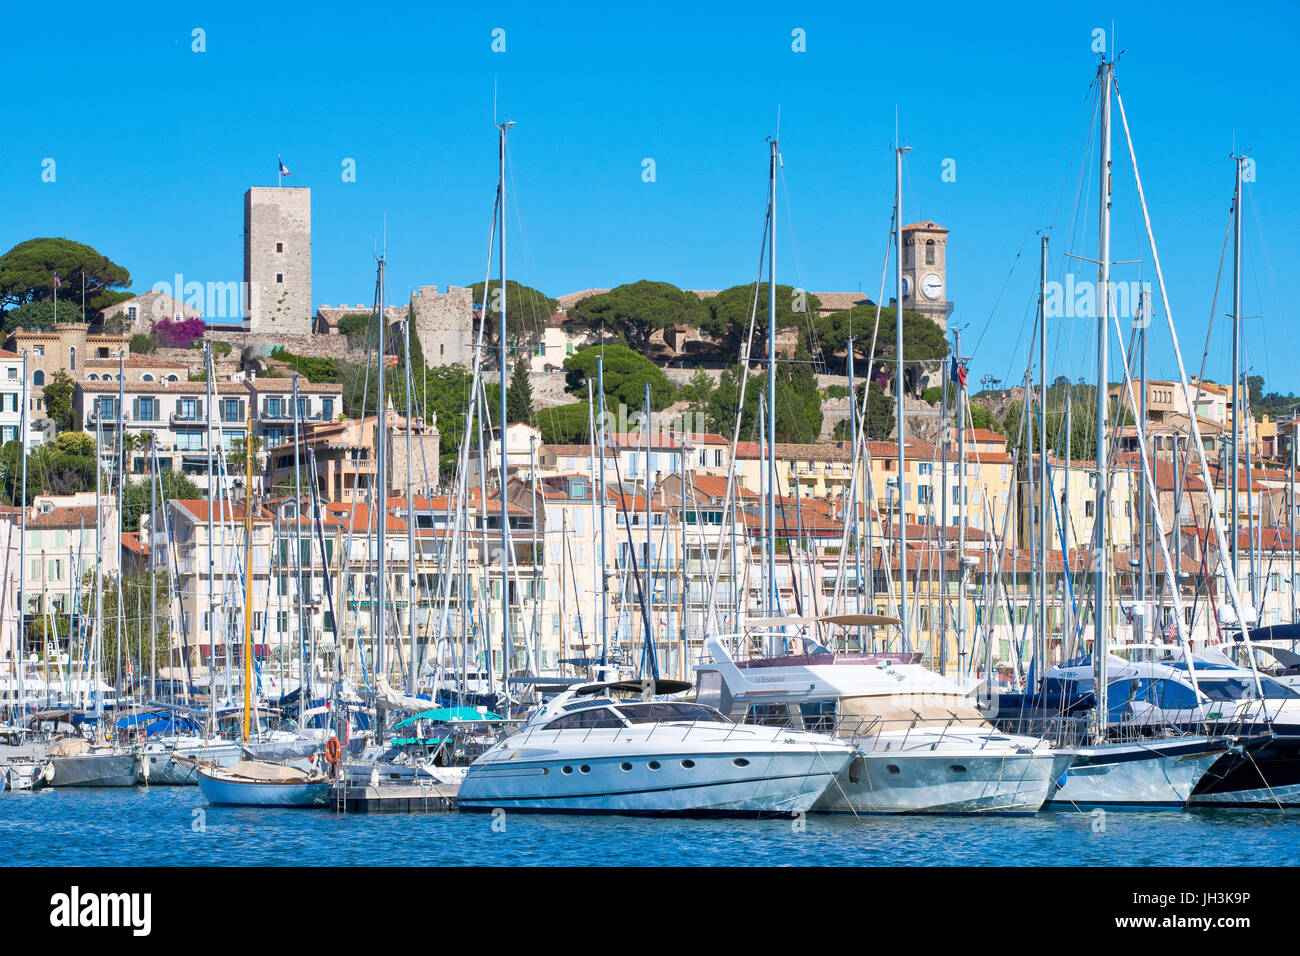 Old port, Le Suquet, Cannes, France Stock Photo - Alamy